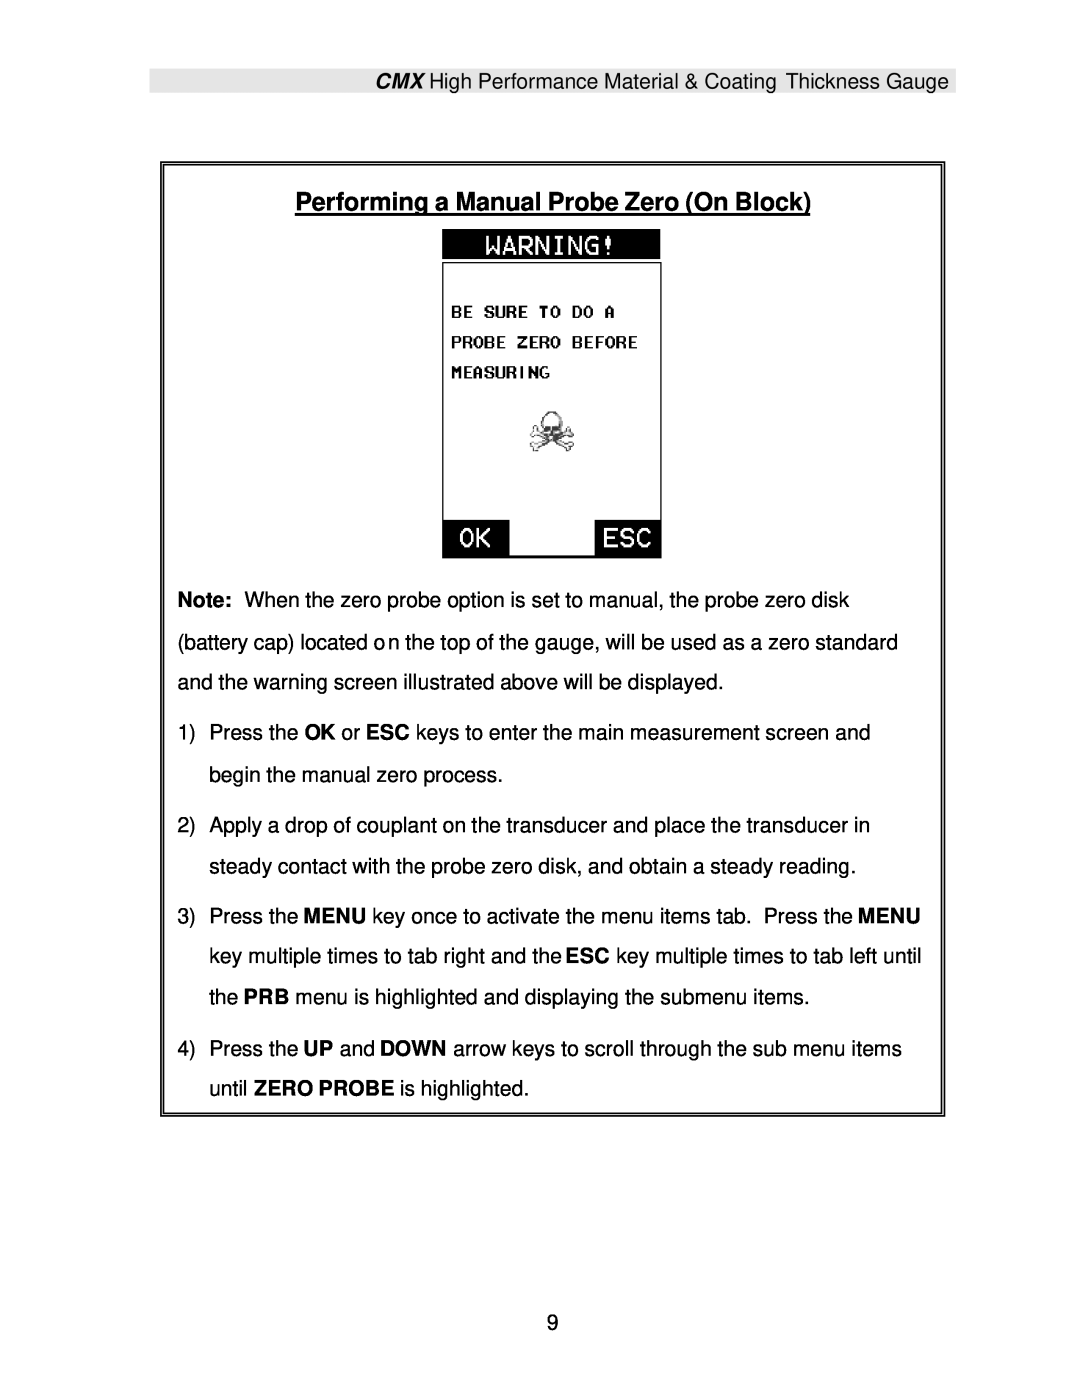 Dakota Digital CMX operation manual Performing a Manual Probe Zero On Block 